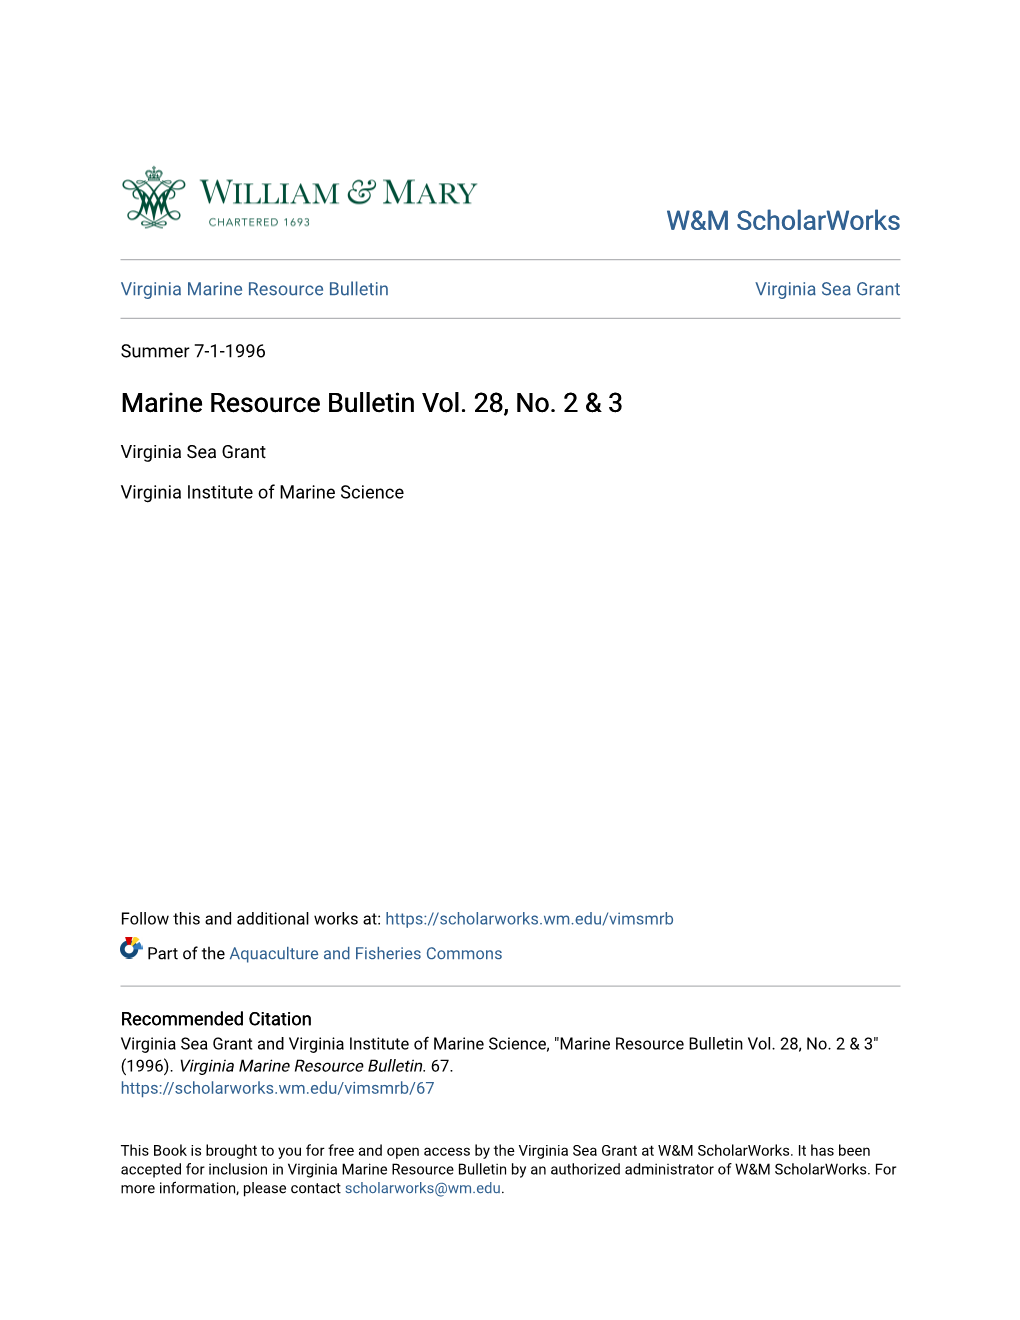 Marine Resource Bulletin Vol. 28, No. 2 & 3